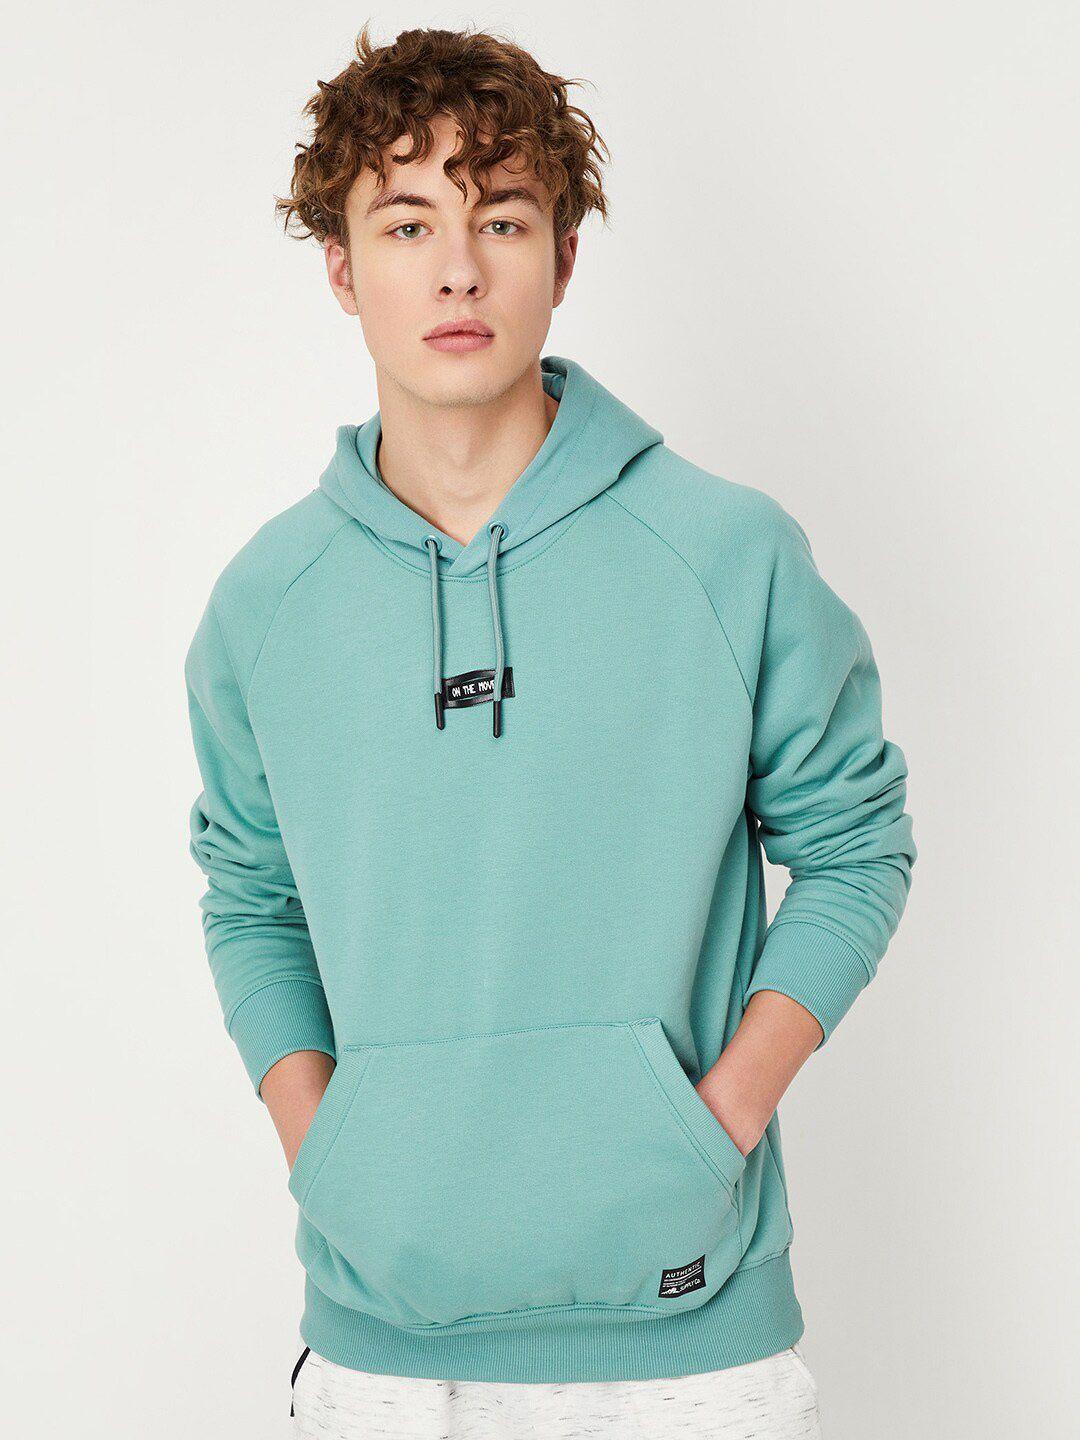 max hooded pullover sweatshirt